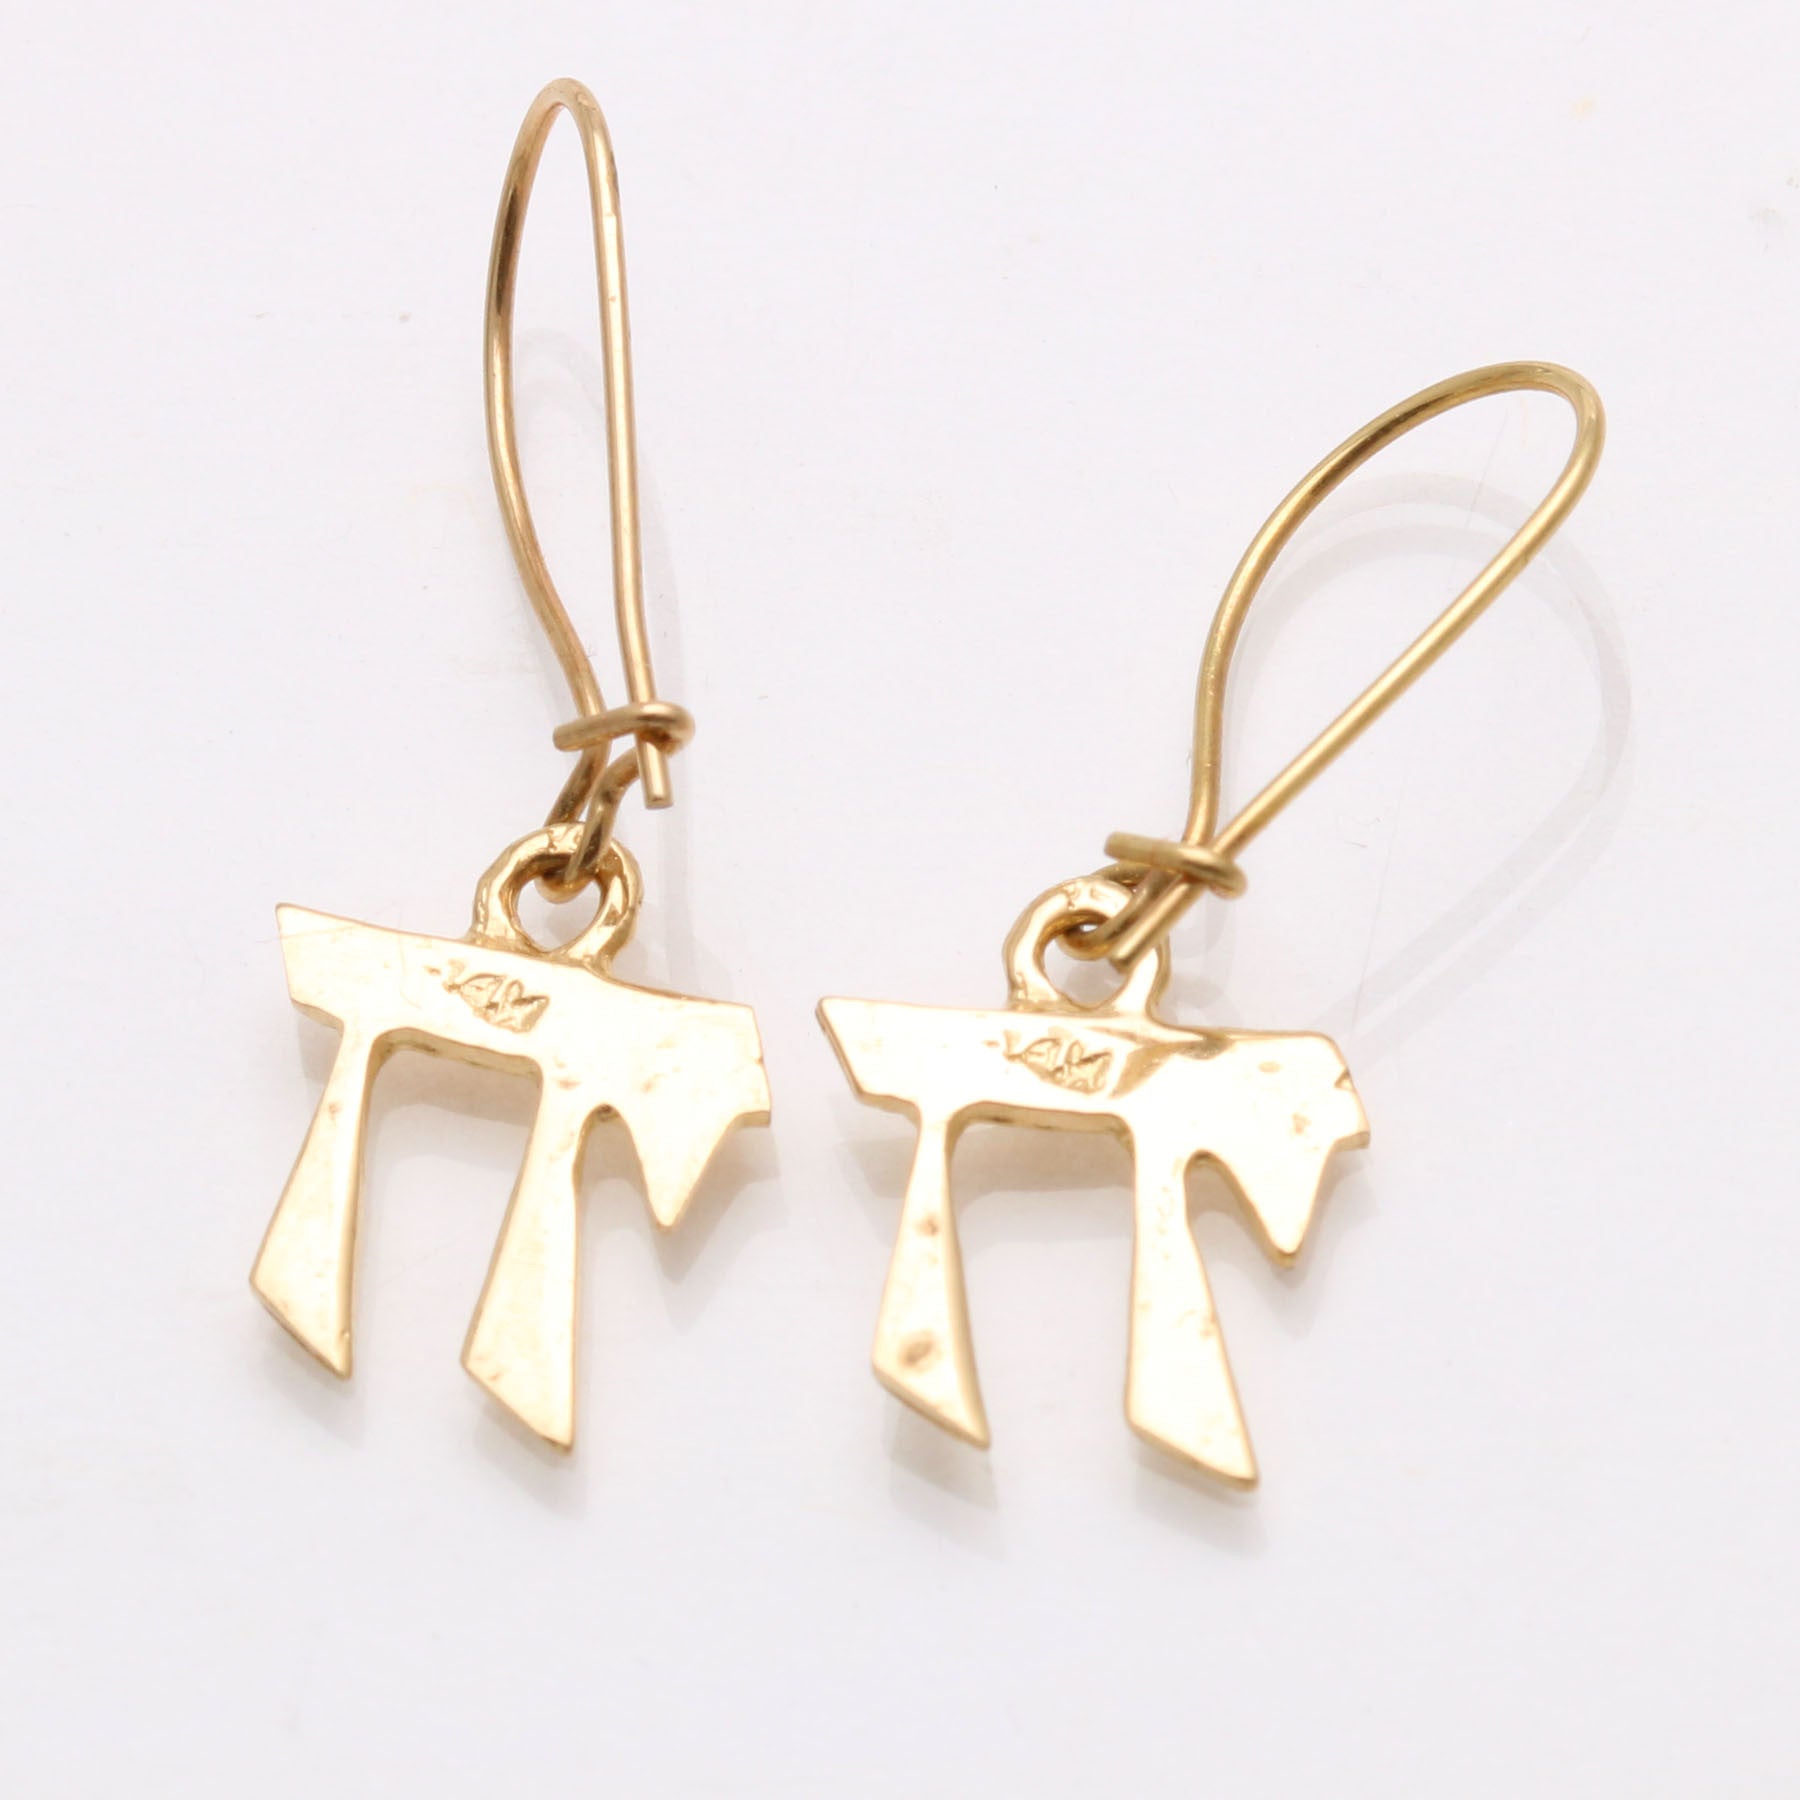 14k Yellow Gold Modern Chai Dangle Earrings - JewelryJudaica